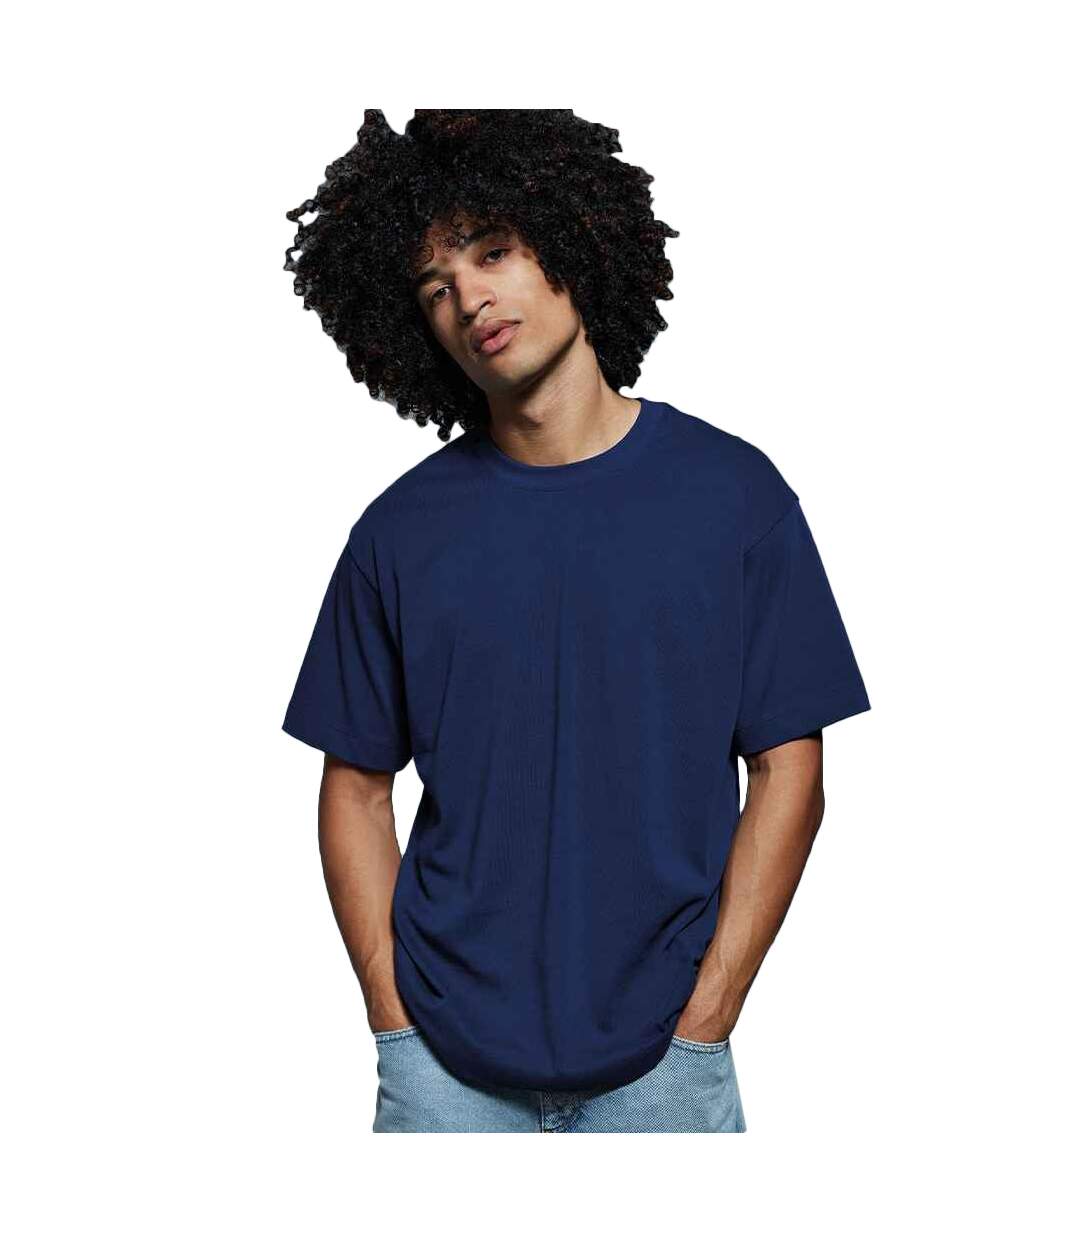 Anthem - T-shirt - Adulte (Bleu marine) - UTPC4810